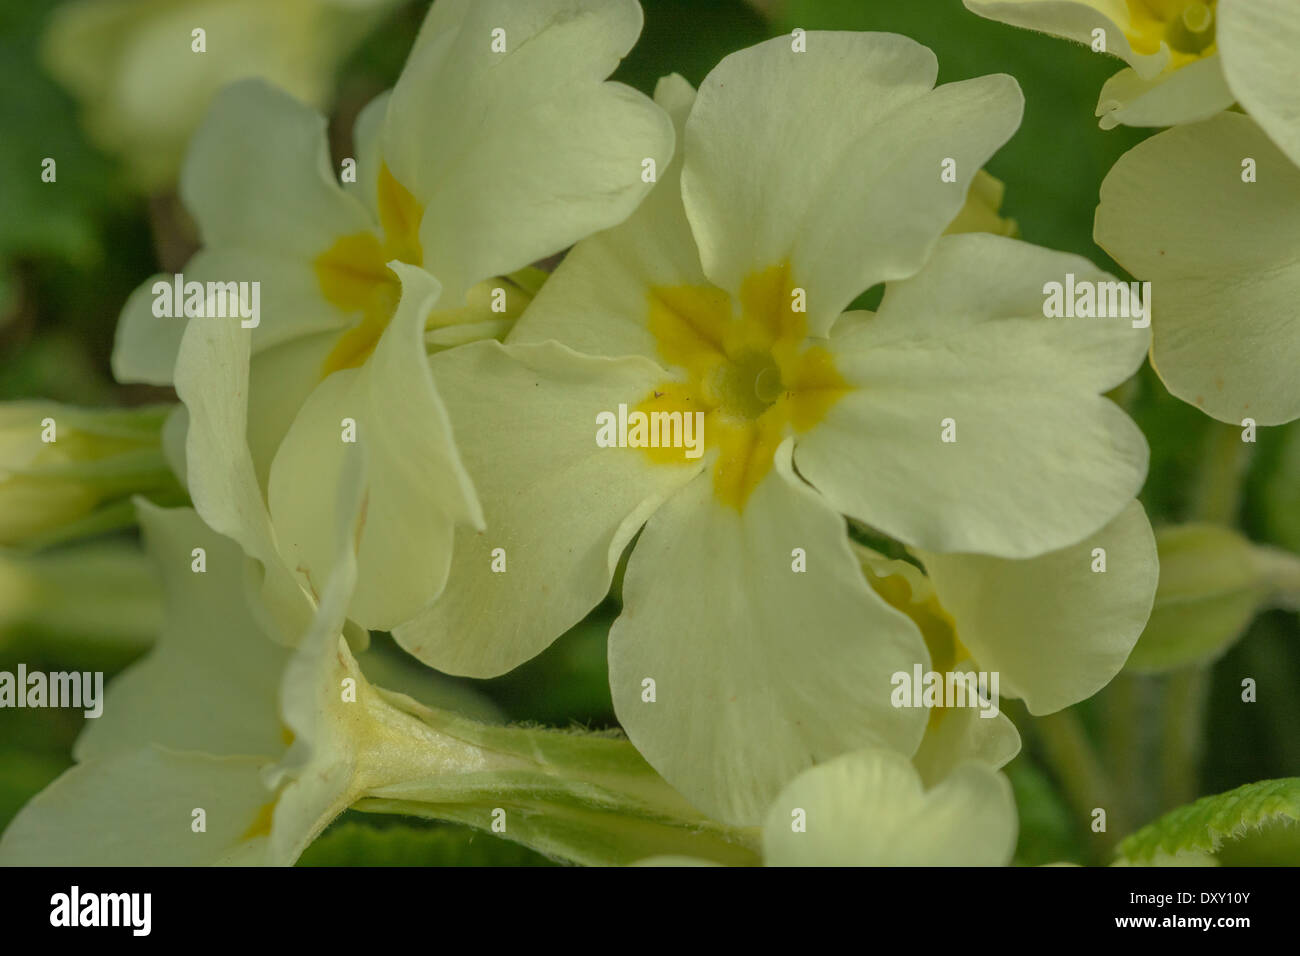 Close-up image of the sulphur yellow flowers of the early springtime flower 'primrose' / Primula vulgaris. Wild primroses, primroses in the wild. Stock Photo